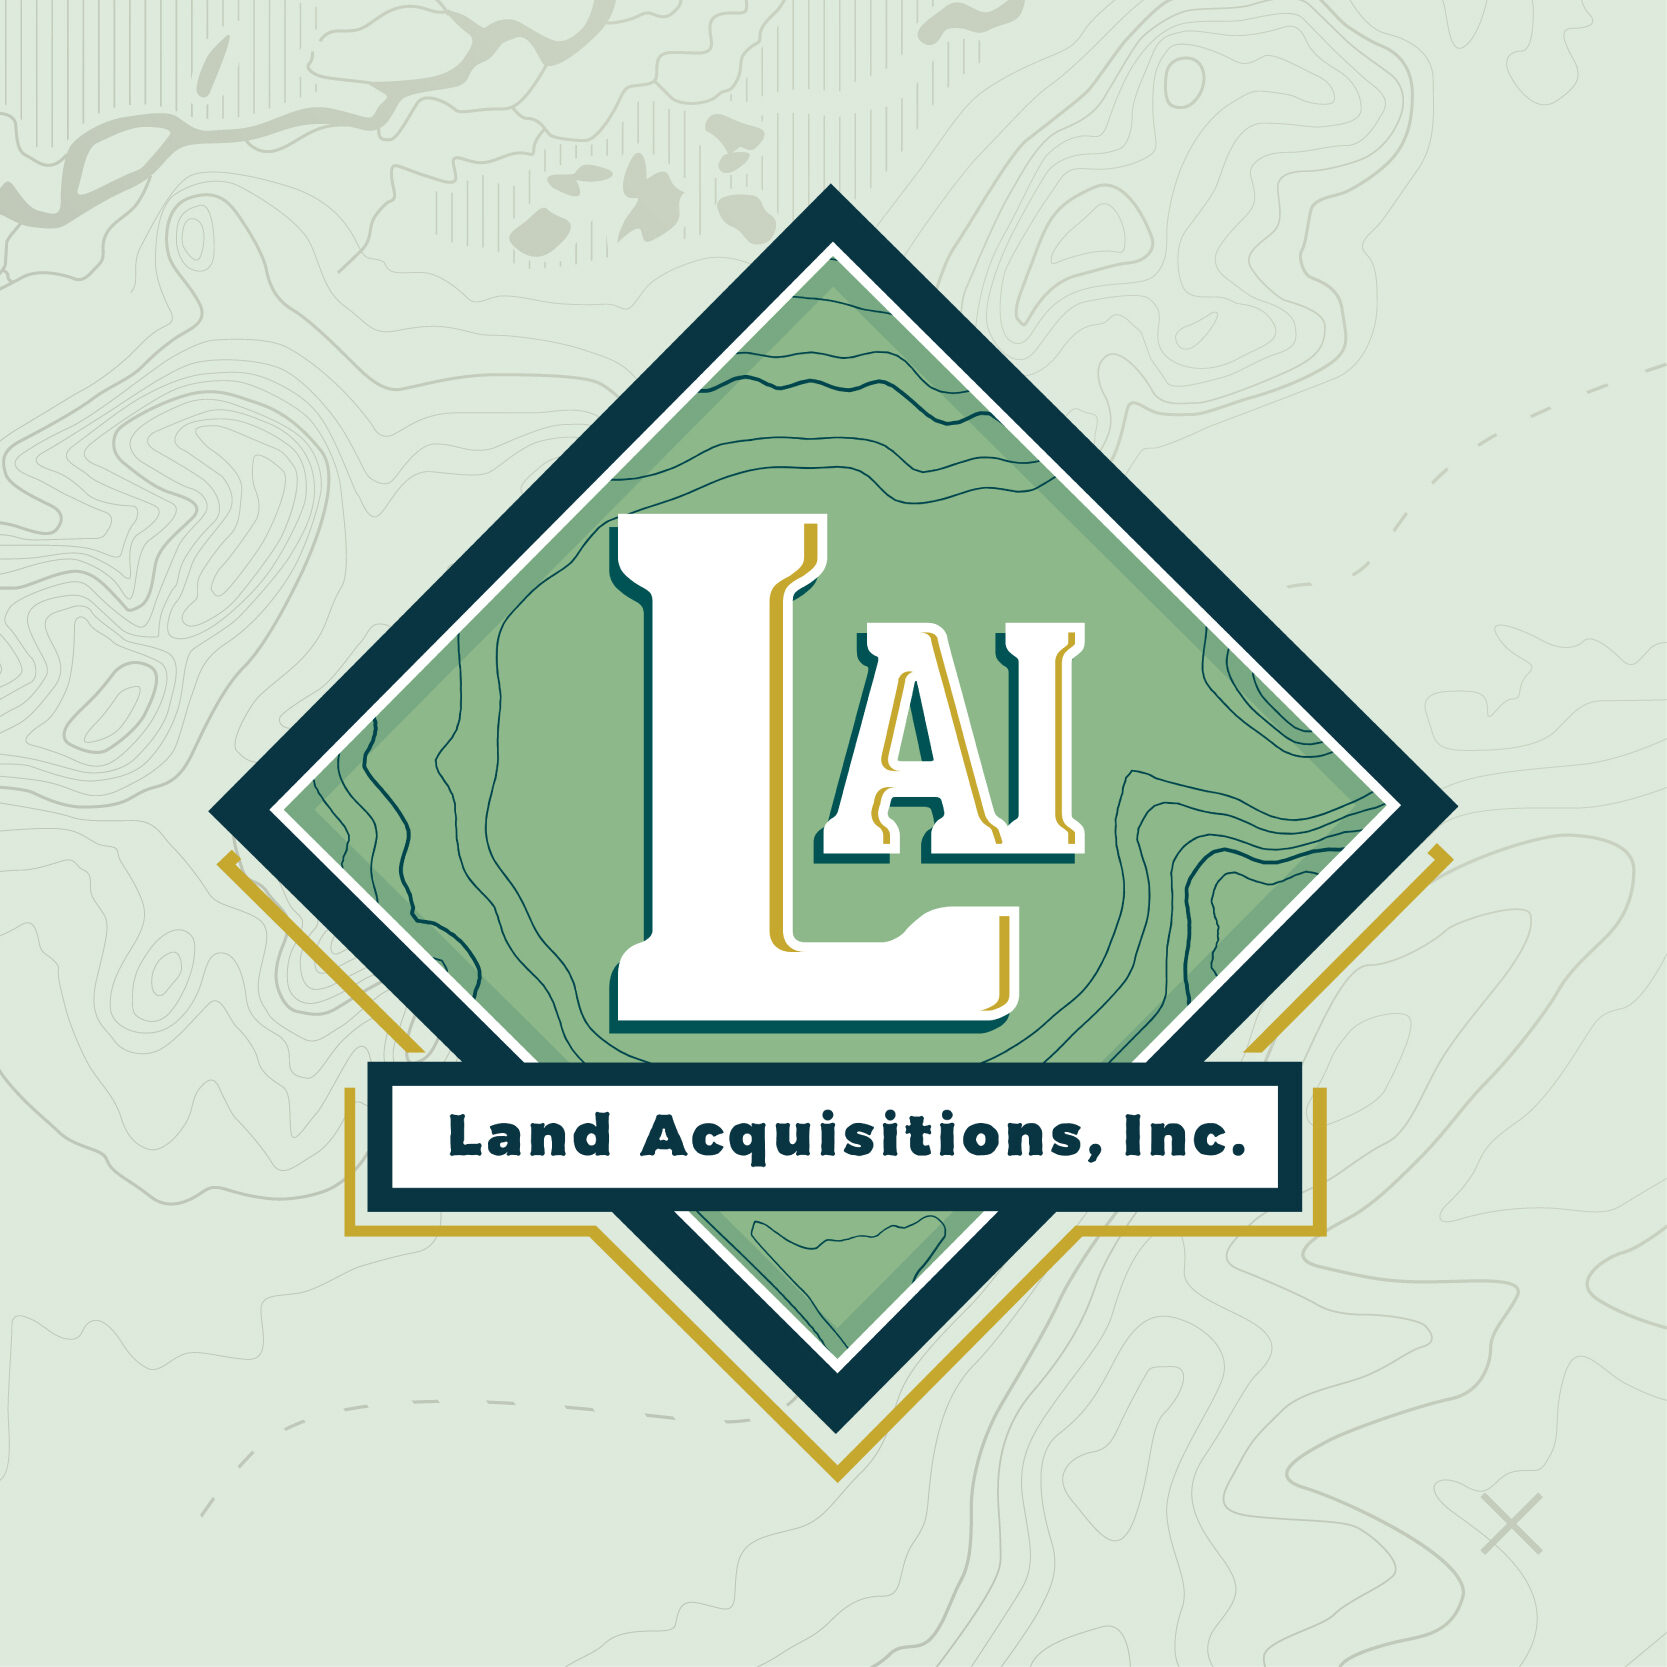 Land Acquisitions, Inc. | SnapMe Creative